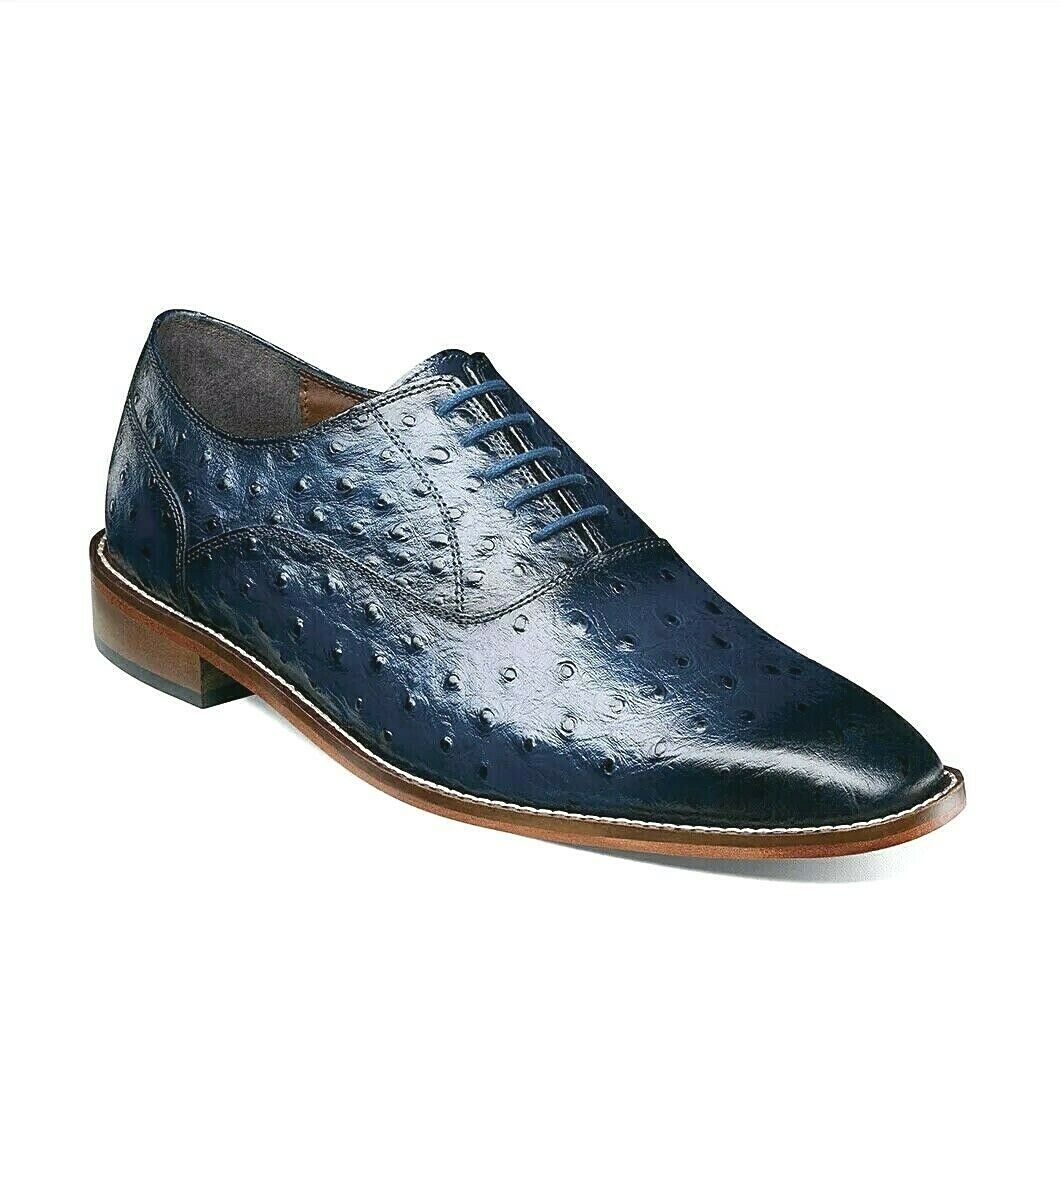 Stacy Adams Roselli Leather Sole Plain Toe Oxford Men's Shoes Blue 25472-400